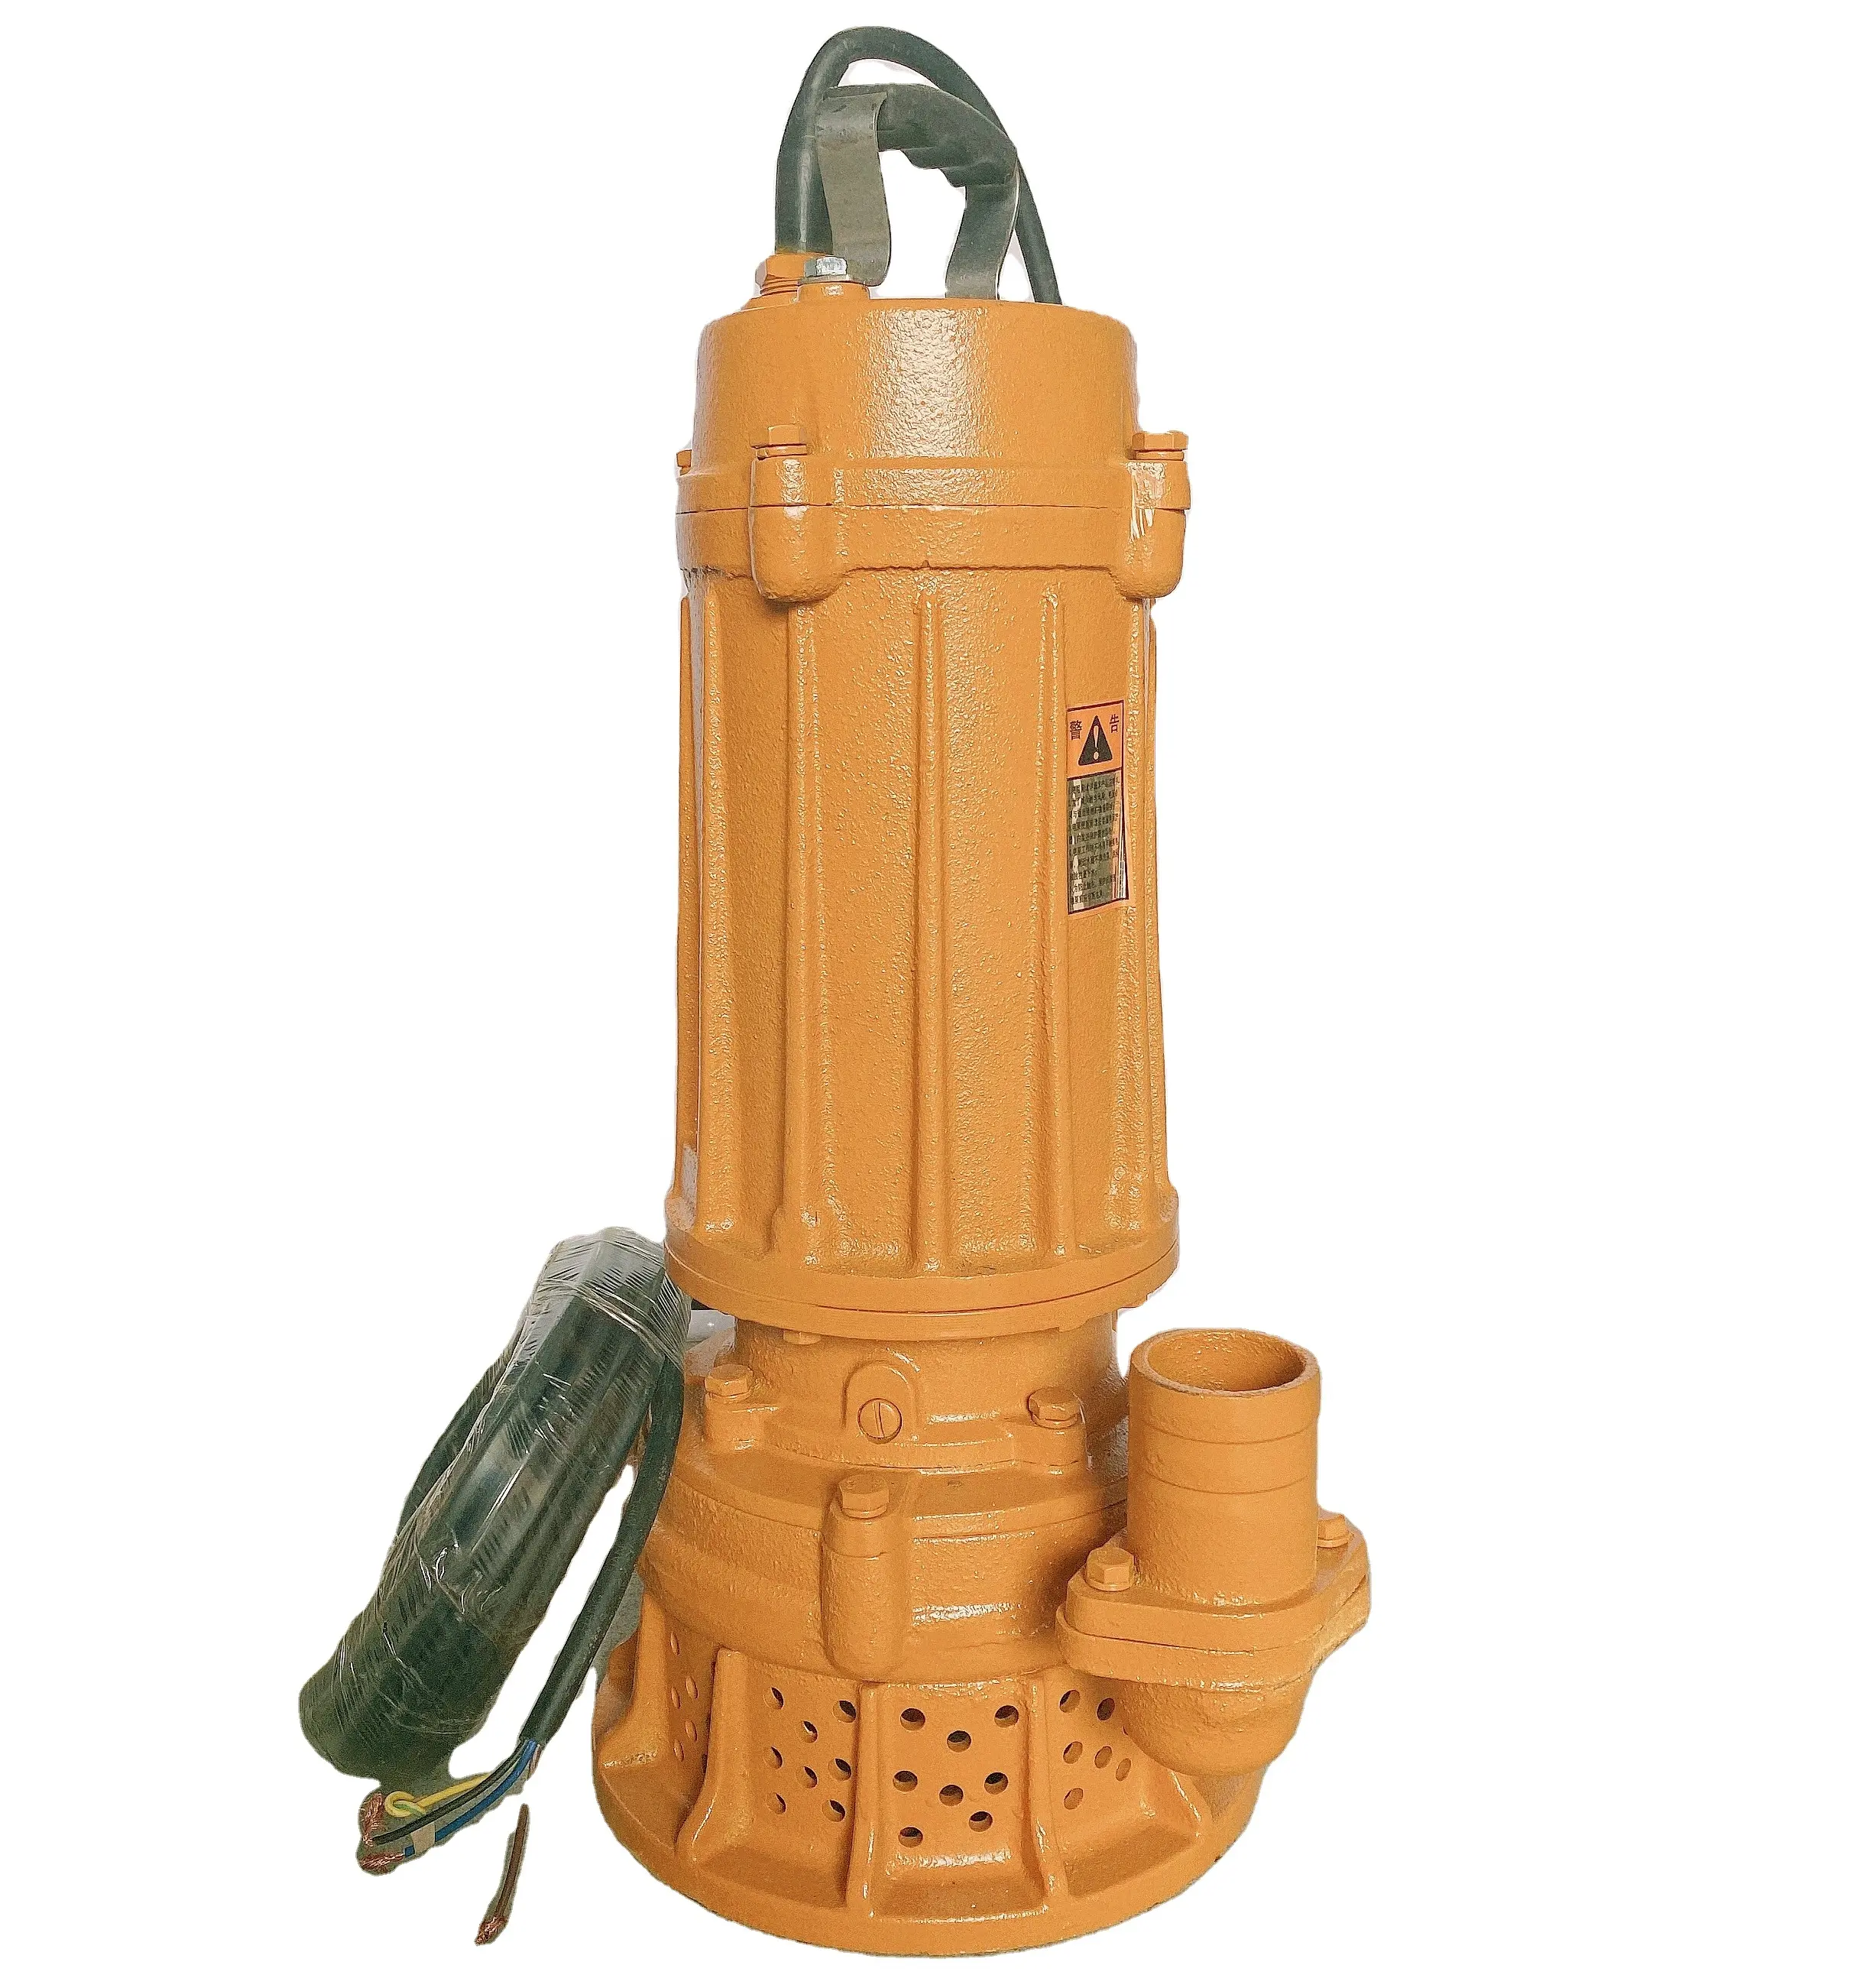 IMPA591630 Pompa Sedot Elektrik WQ15, Pompa Submersible Limbah Tanpa Sumbatan